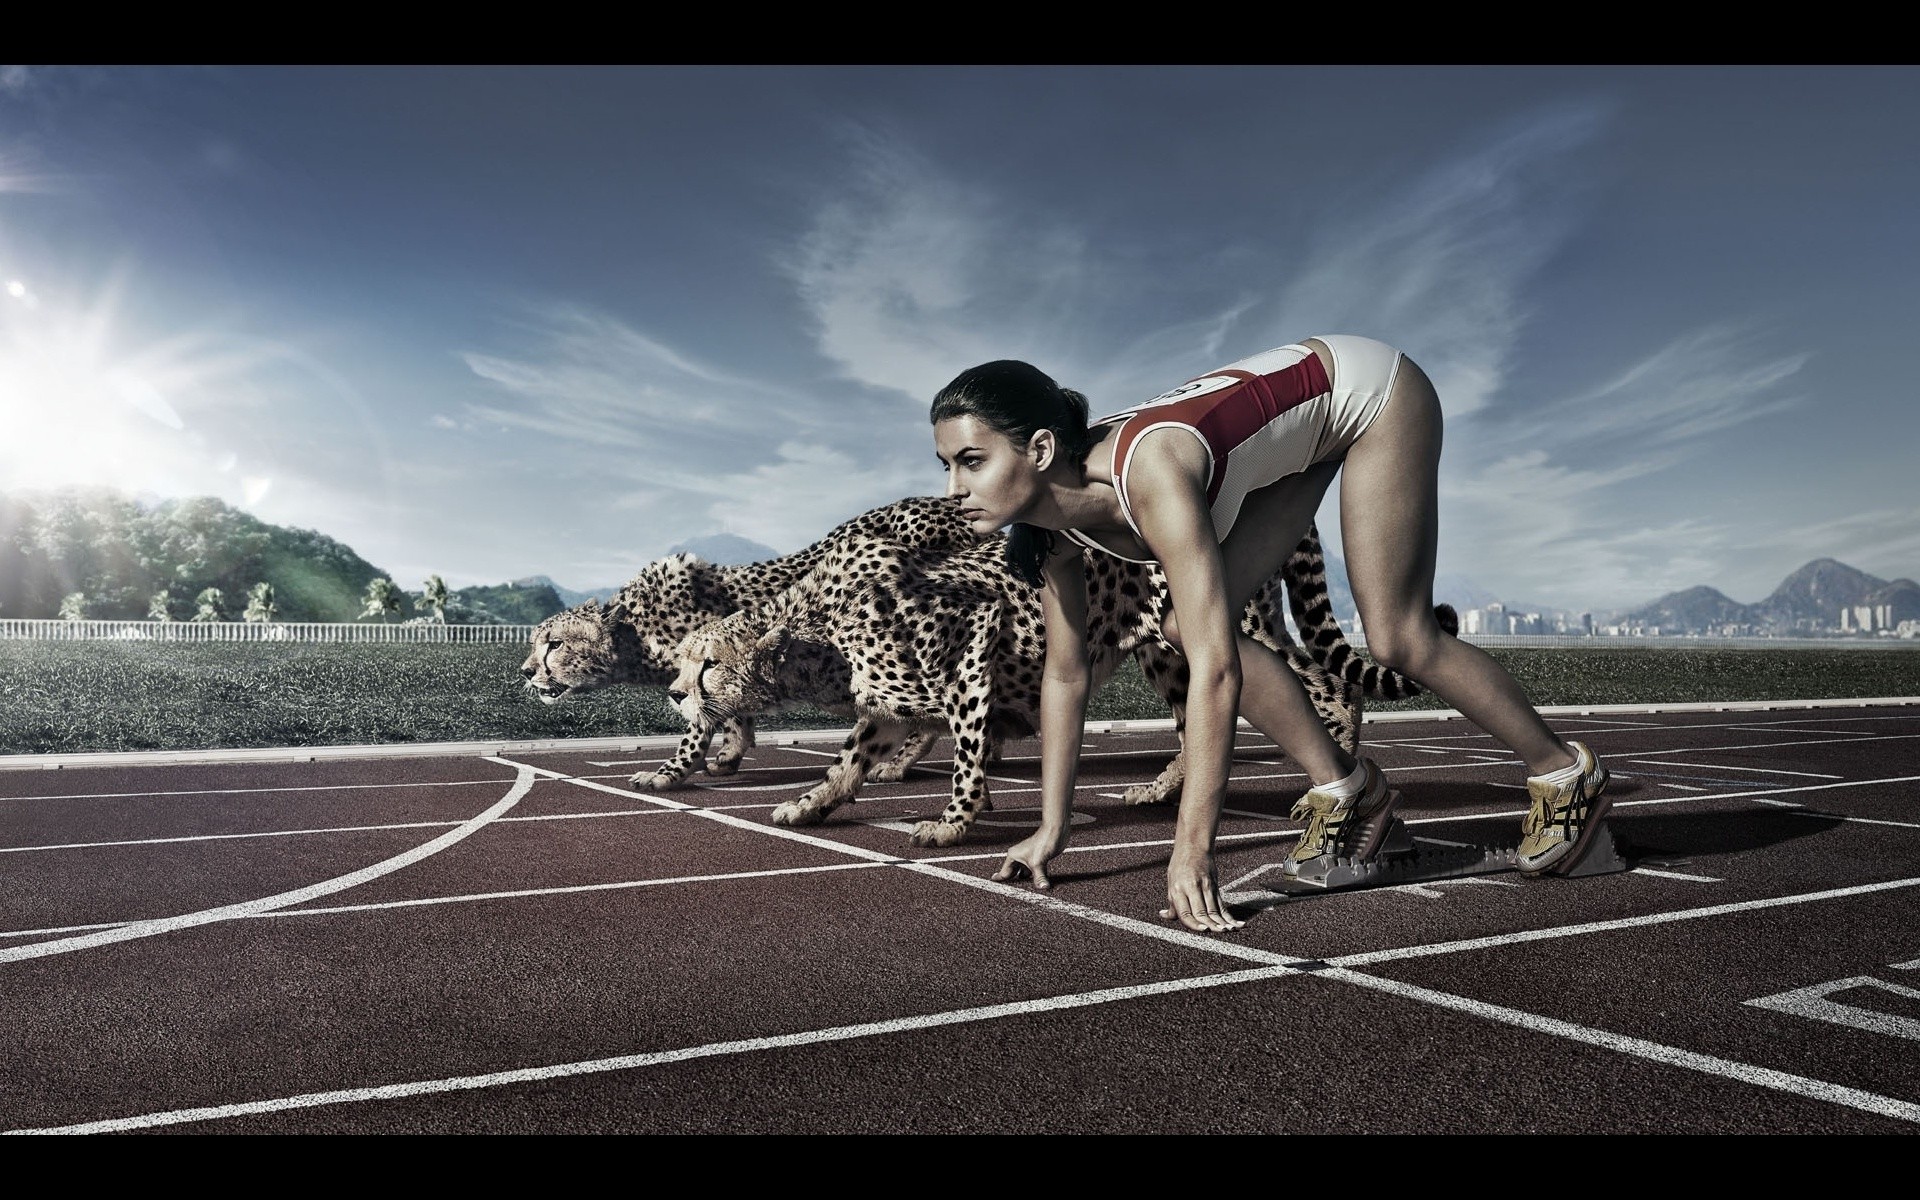 1920x1200 Marathon Runner Girl with Cheetah on Race Start Line wallpaper